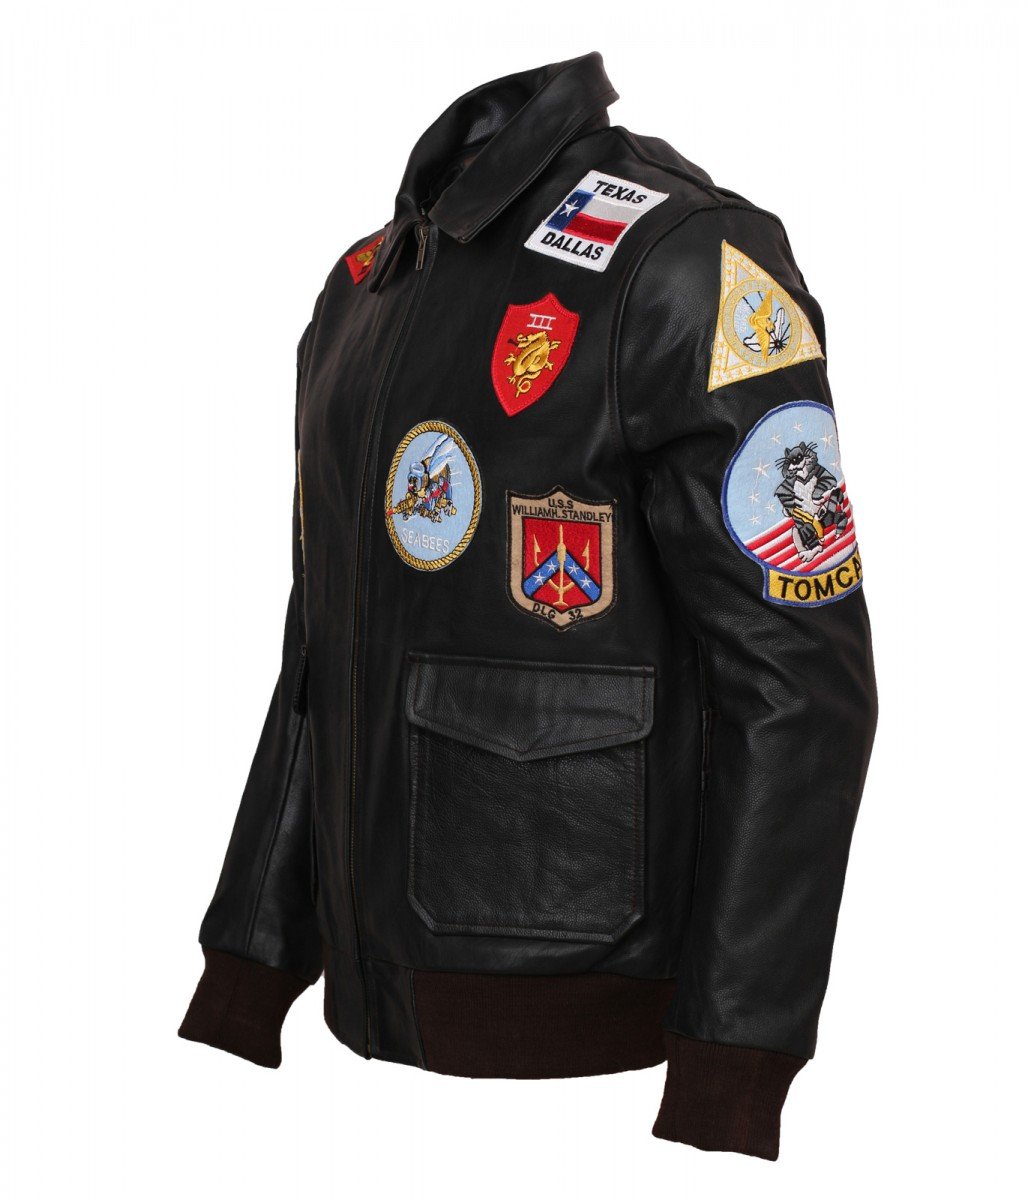 Top Aviator Leather Jacket for Men's Black Leather Jacket